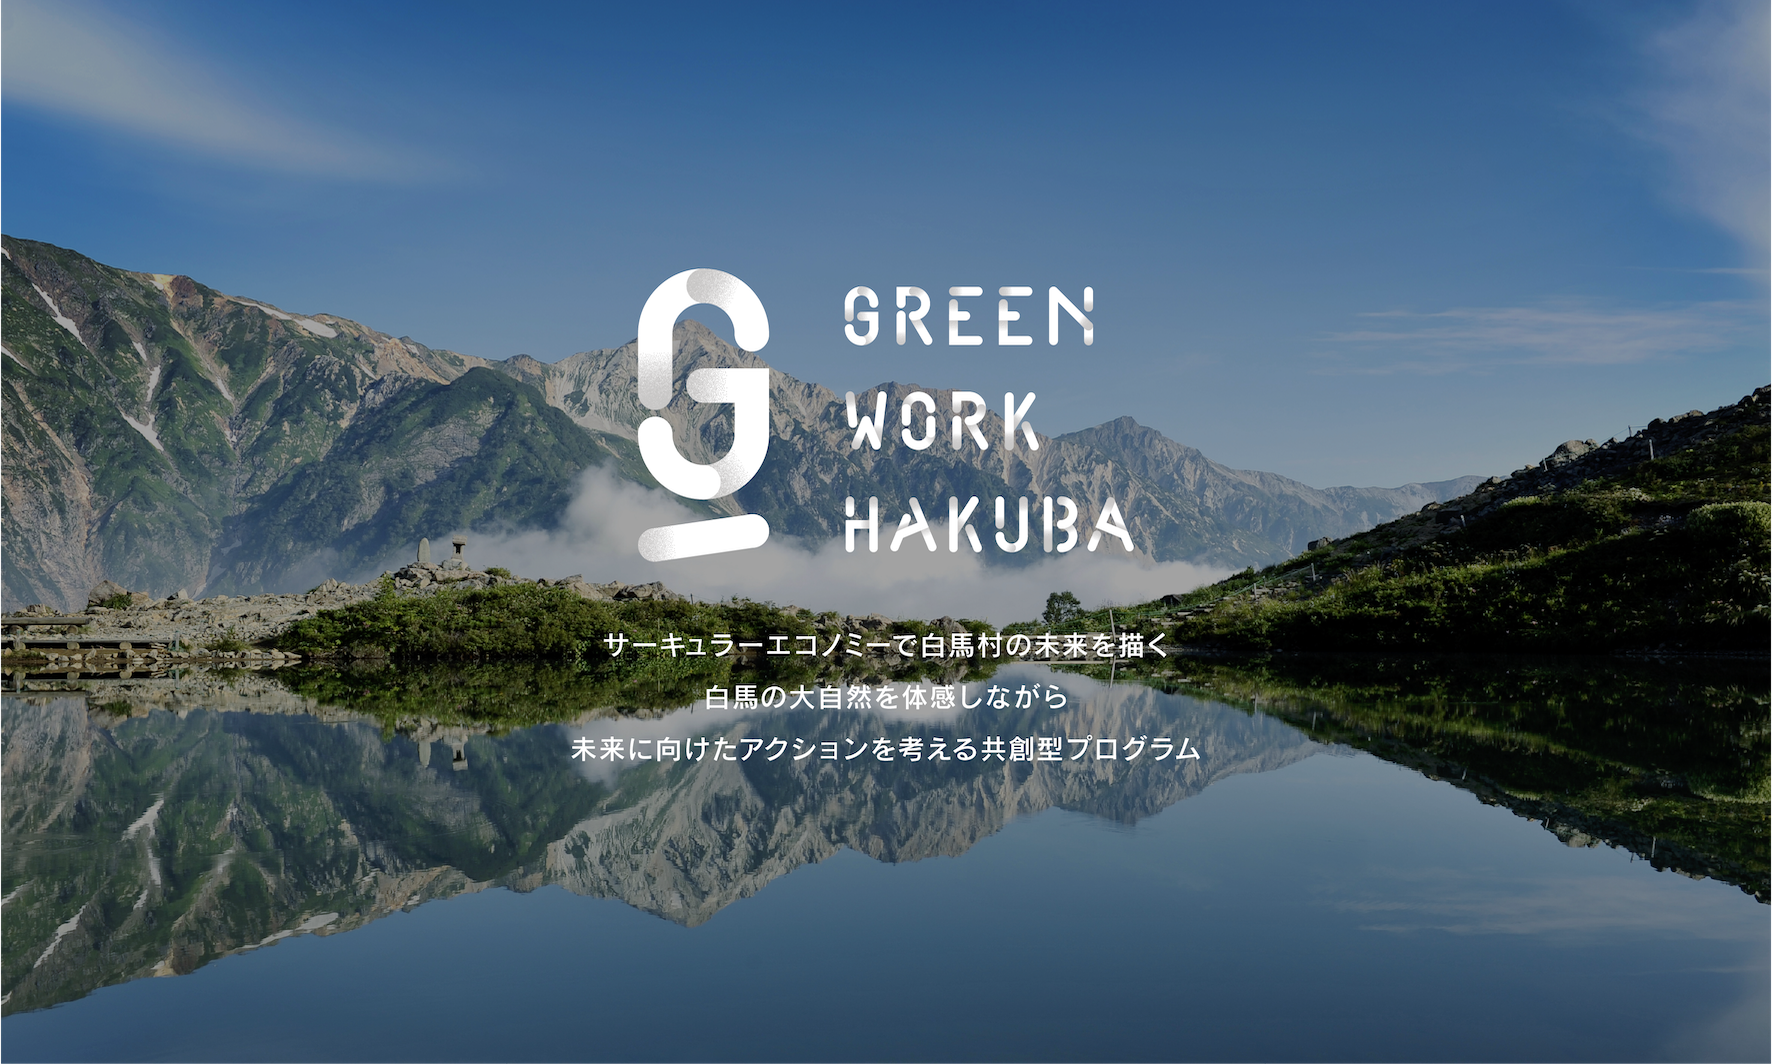 GREEN WORK HAKUBA vol.3が開催、長野県・白馬村で循環型の経済モデル「サーキュラーエコノミー」の実装を目指す